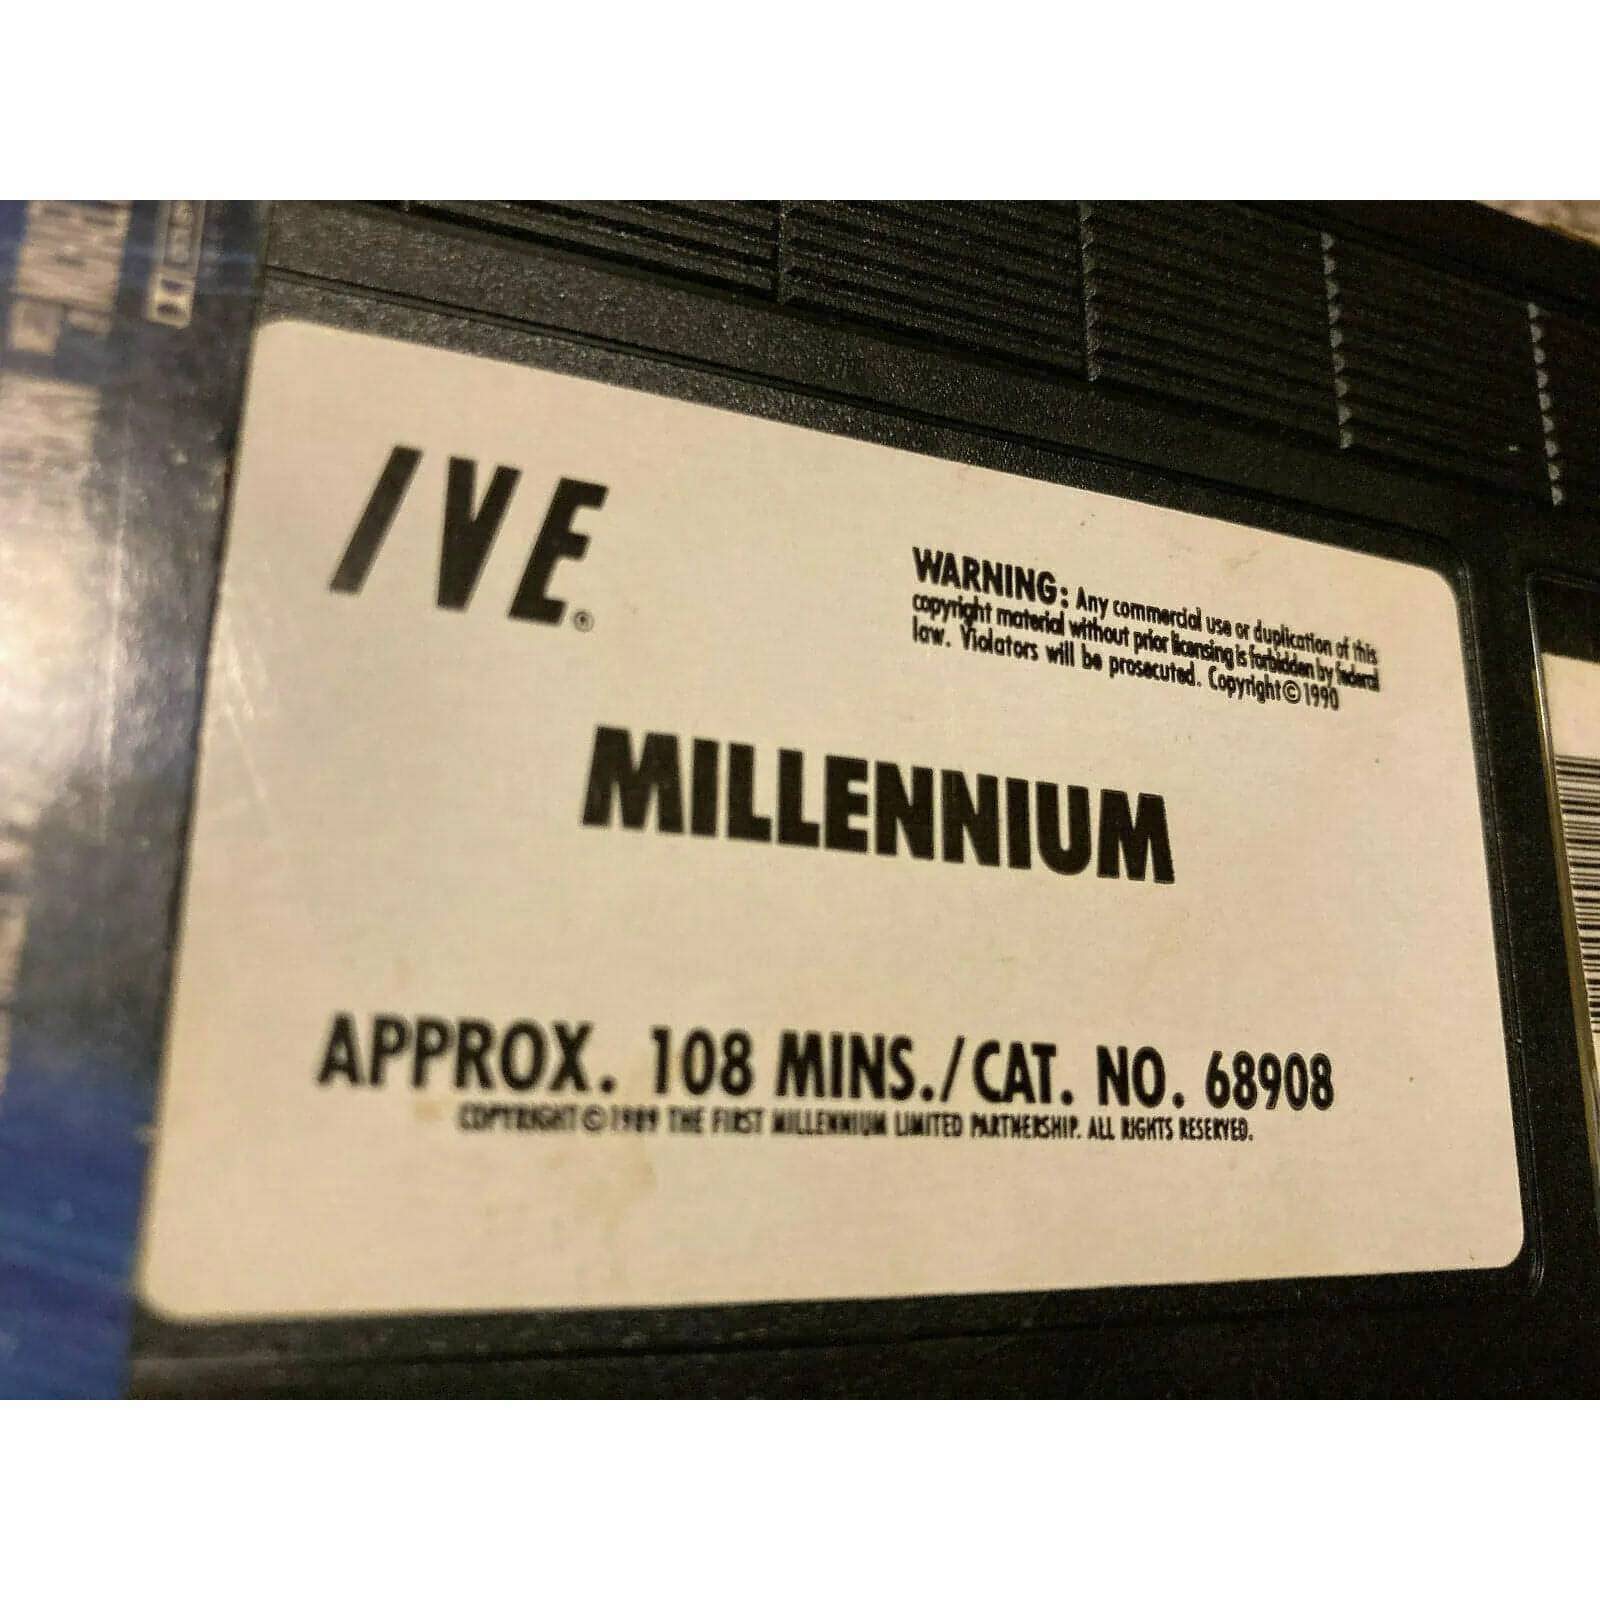 Millennium [VHS International Video Entertainment 1989] BooksCardsNBikes